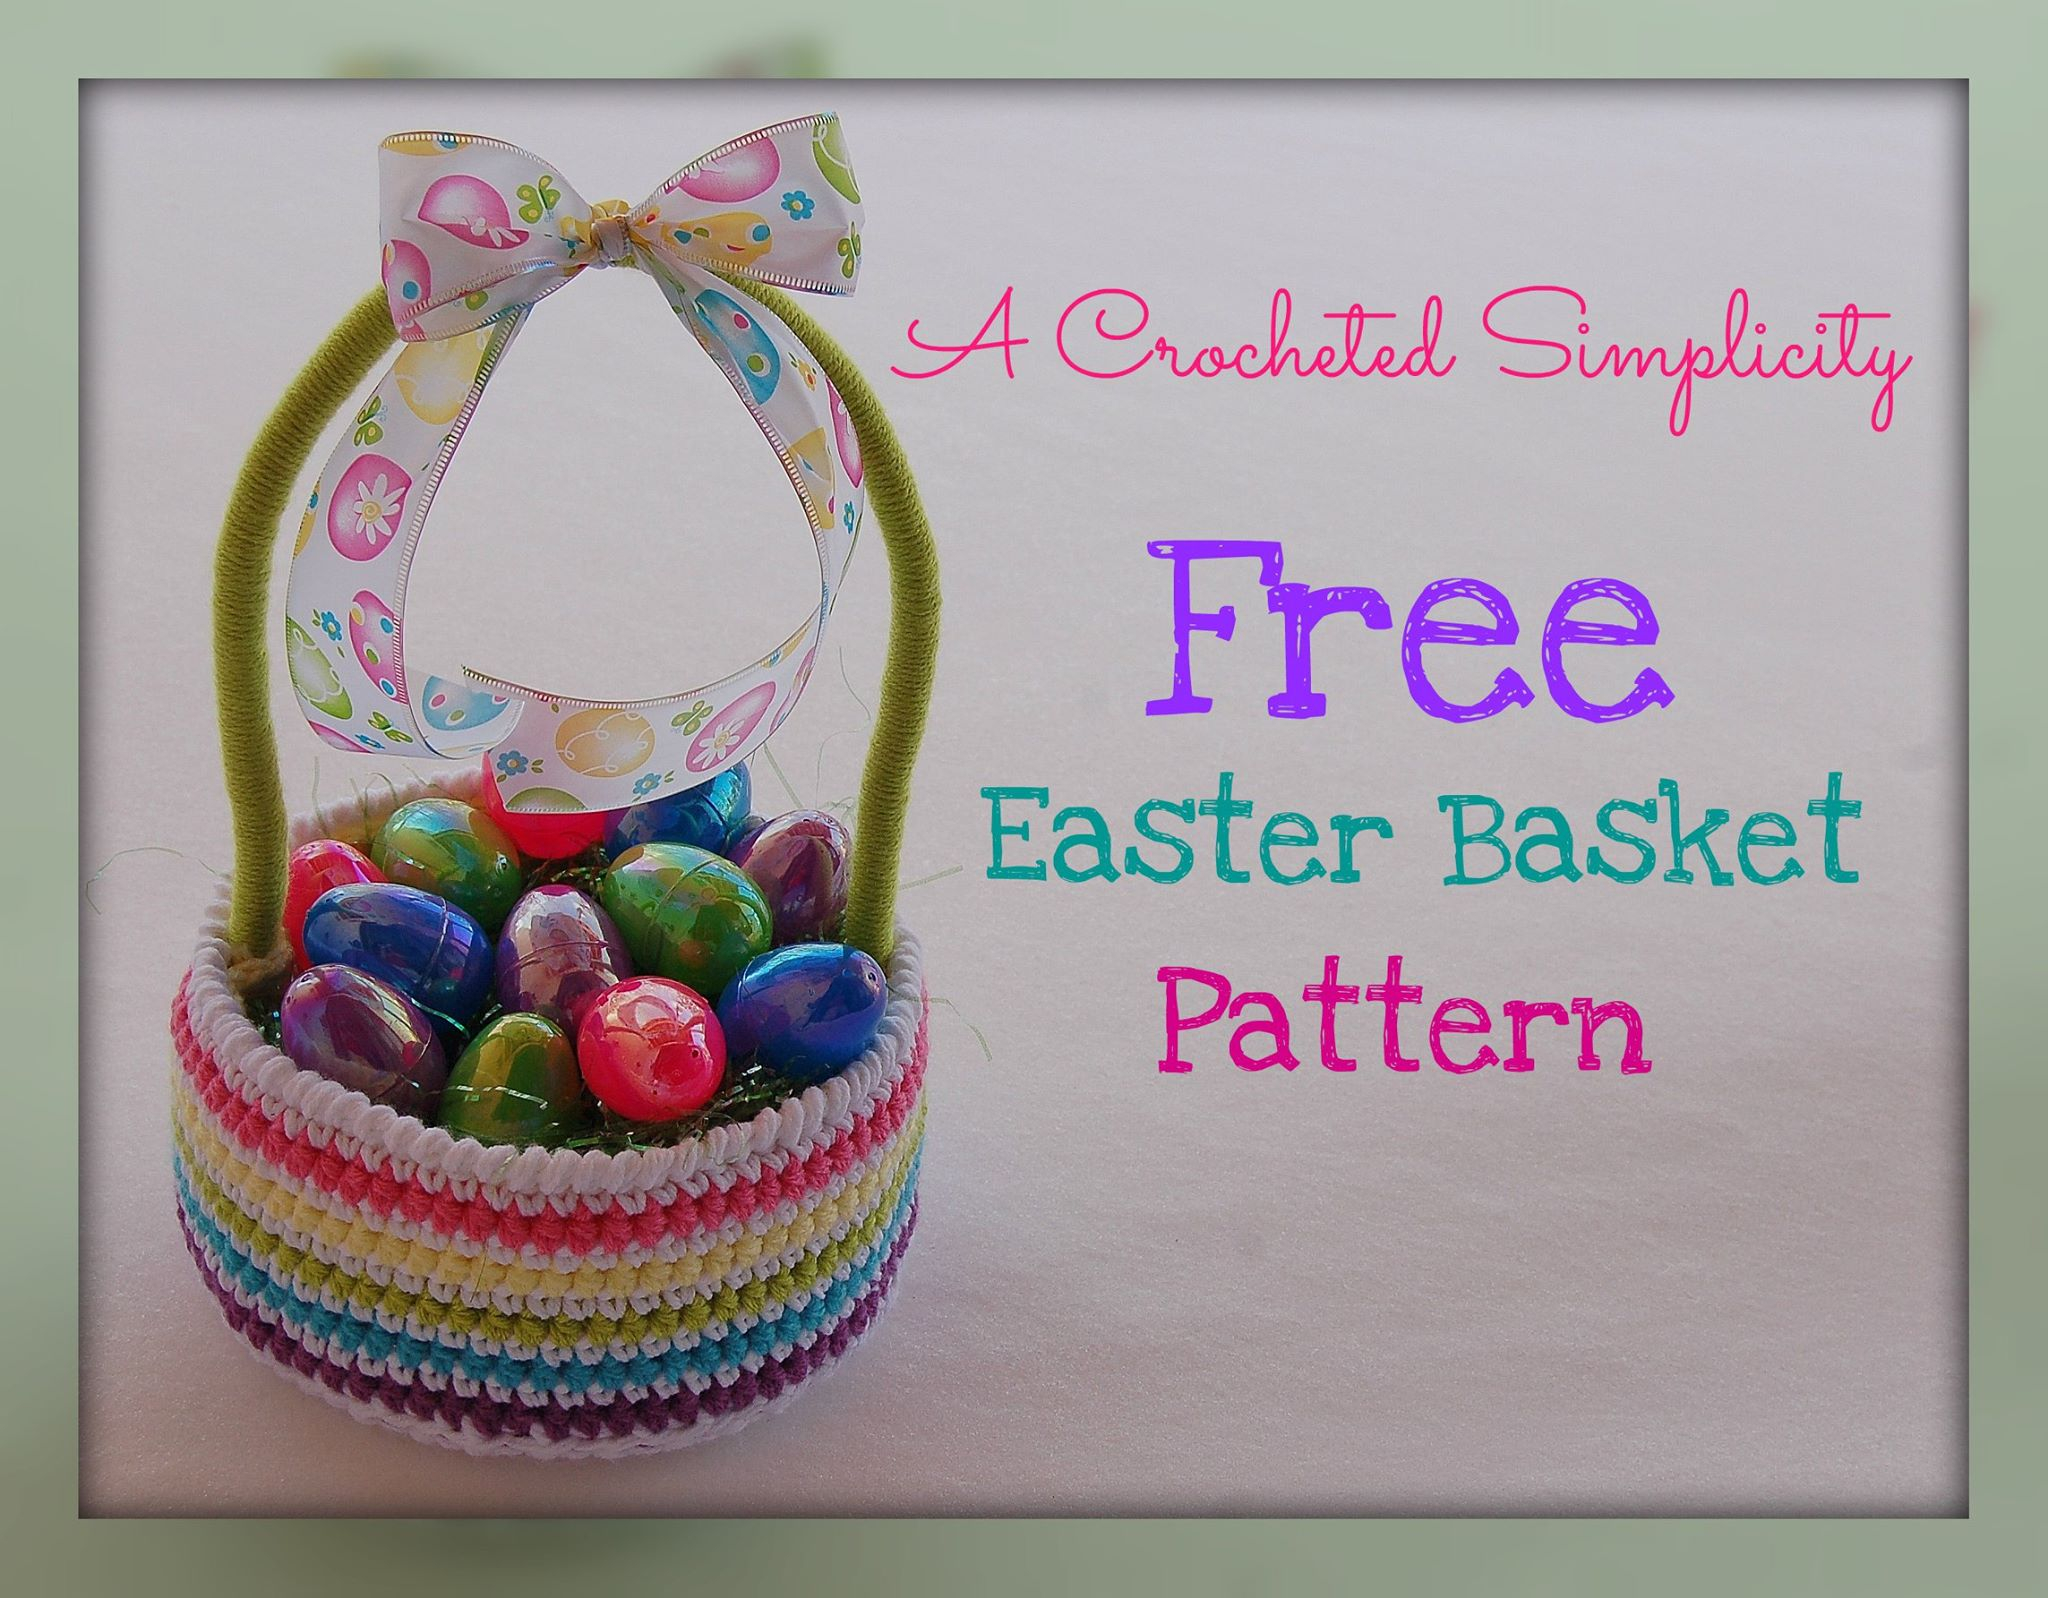 Free Easter Crochet Patterns Free Crochet Pattern Easy Easter Basket A Crocheted Simplicity